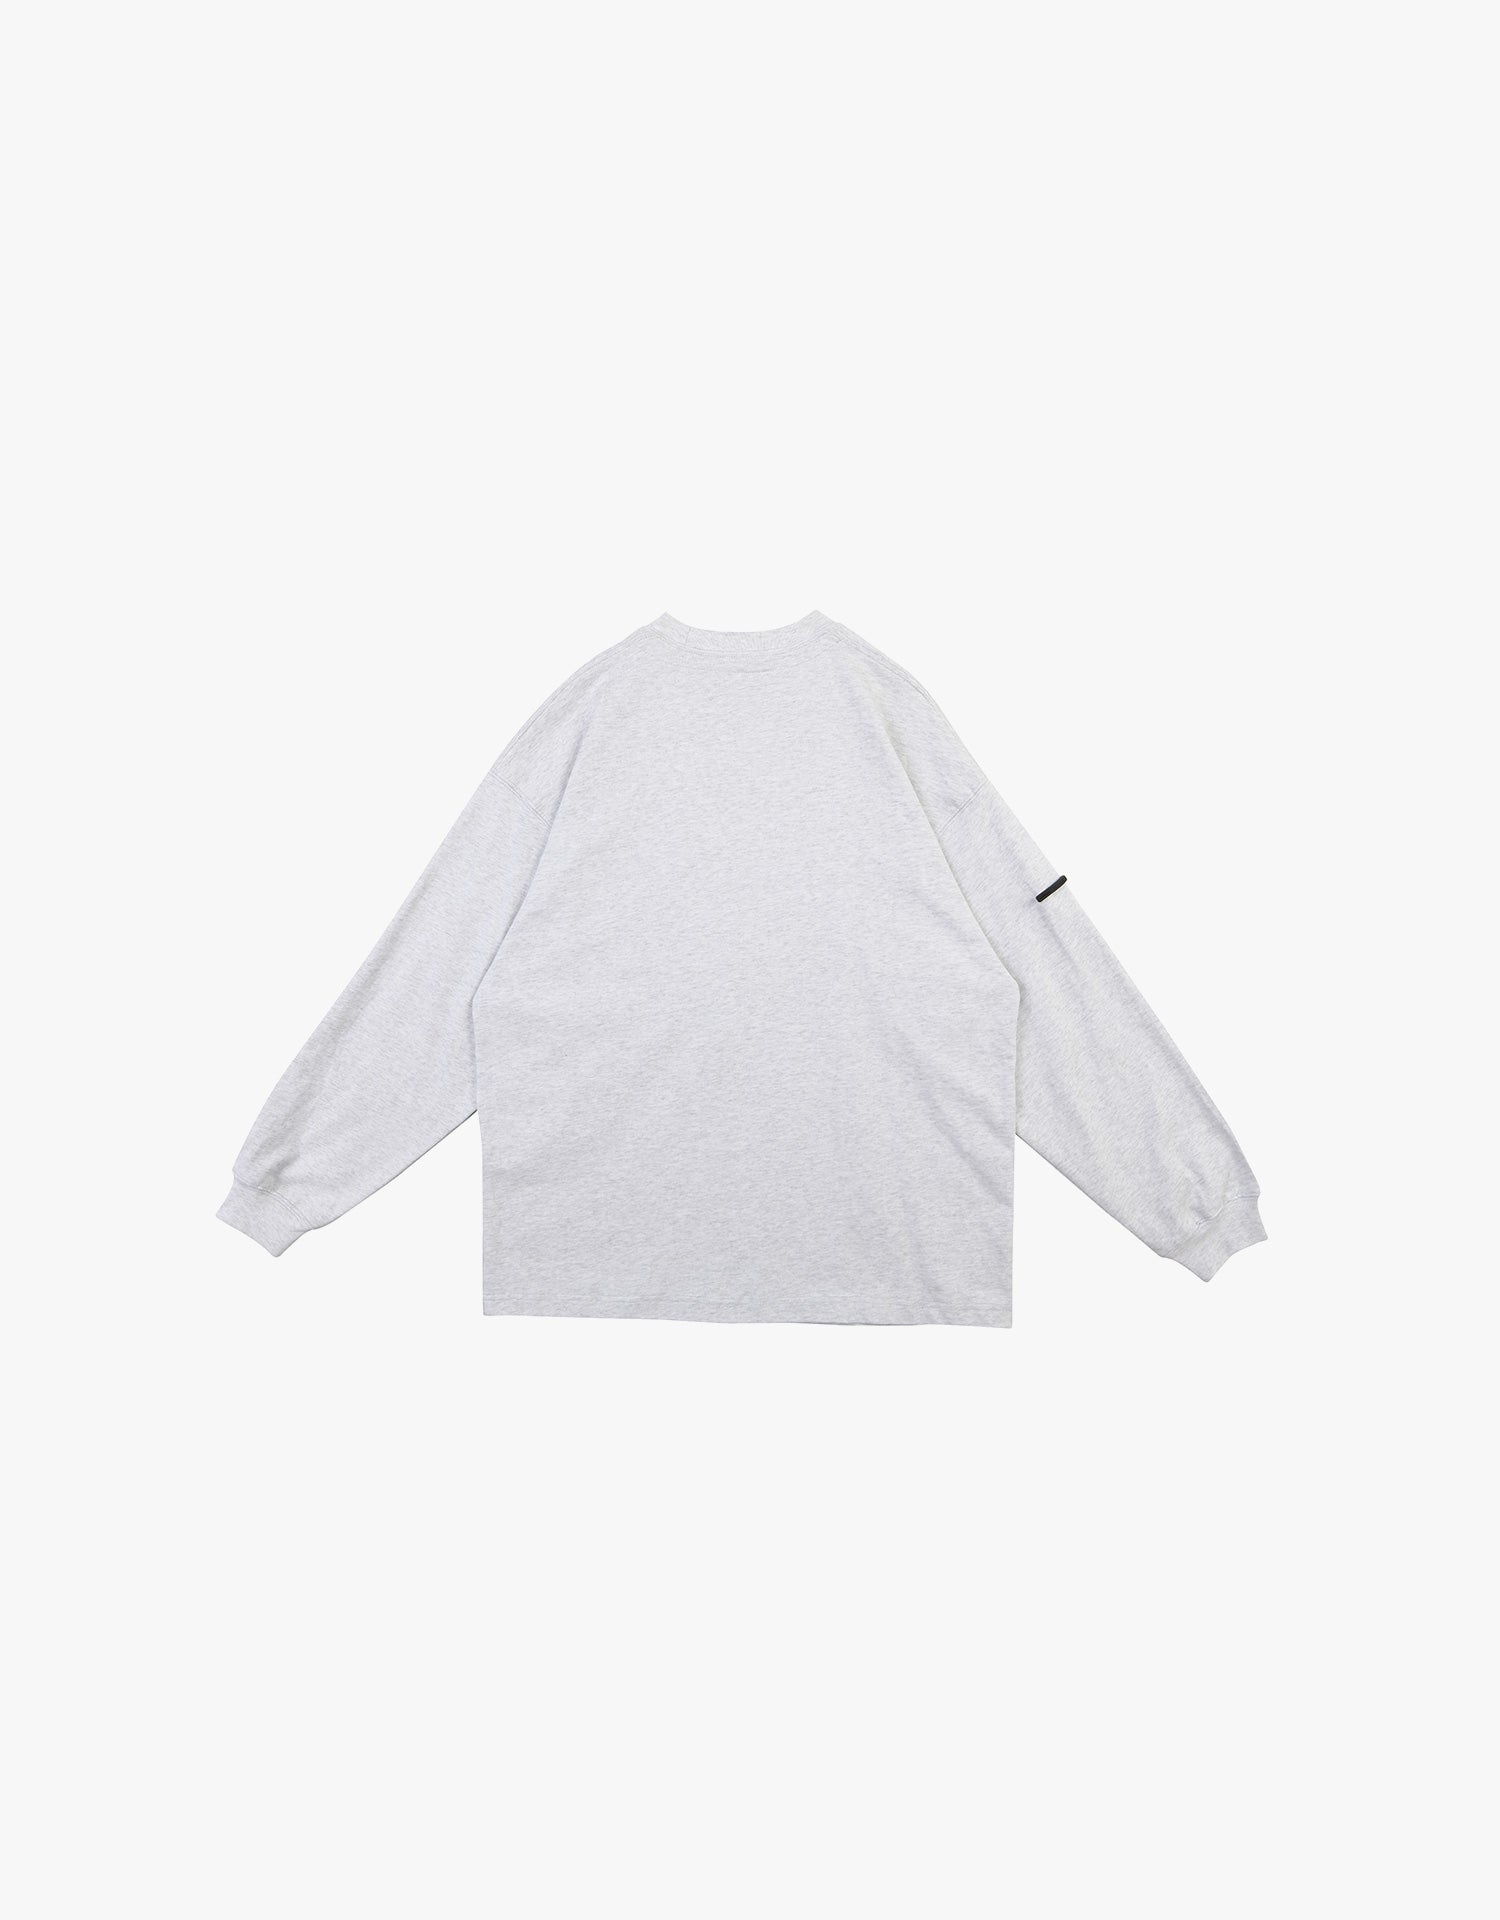 TopBasics Pocket Long Sleeve Cotton T-Shirt